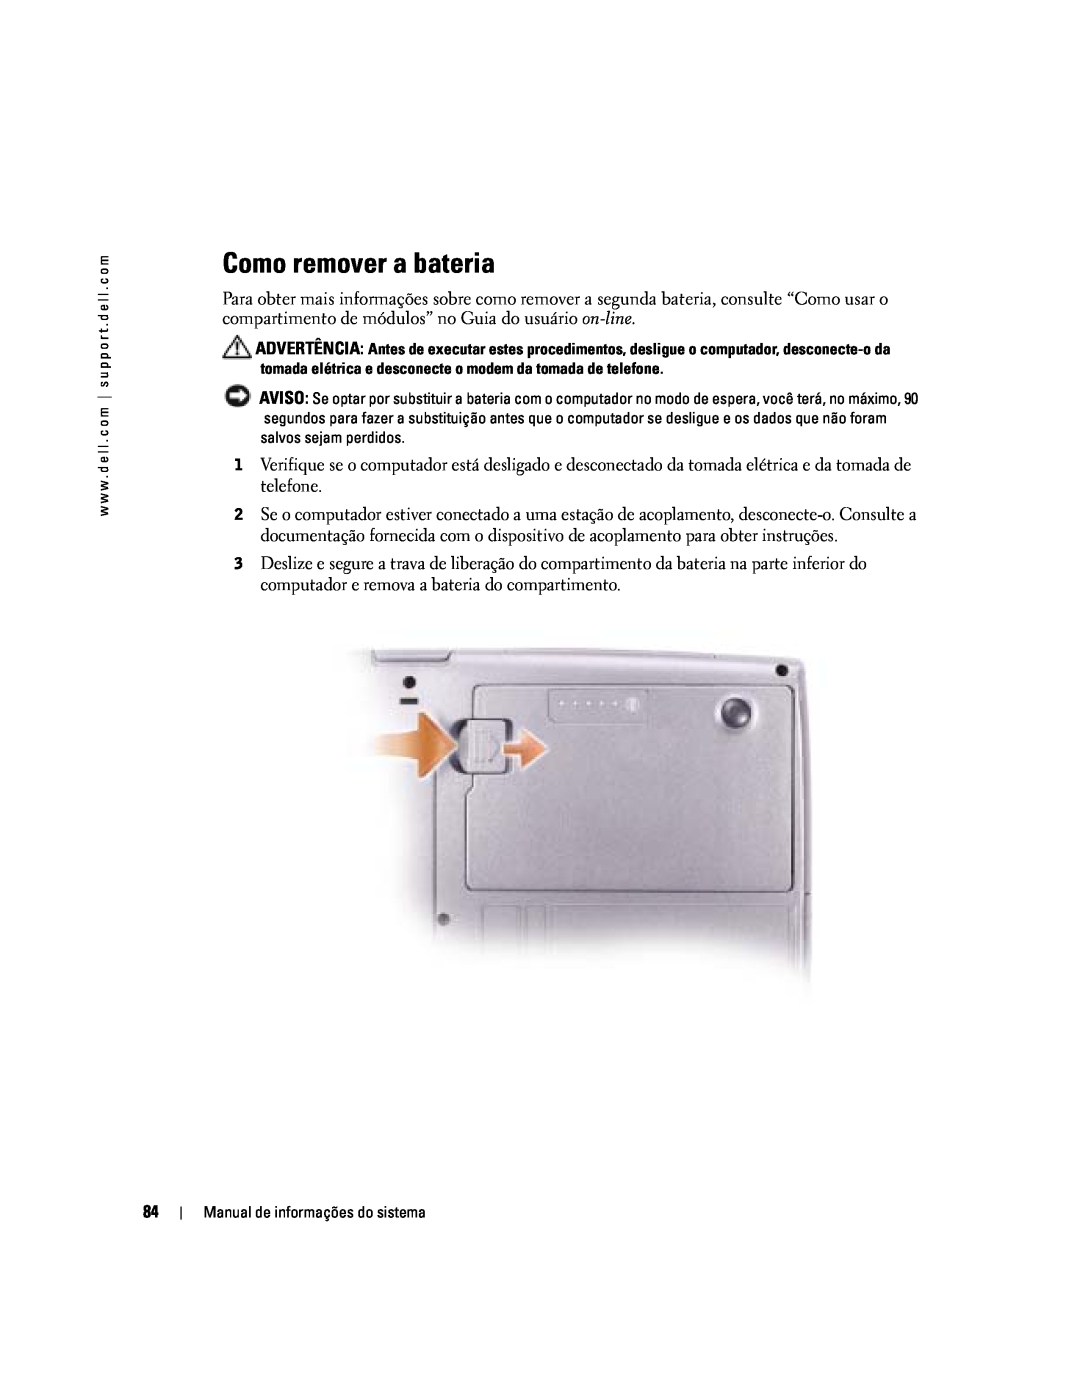 Dell D505 manual Como remover a bateria 